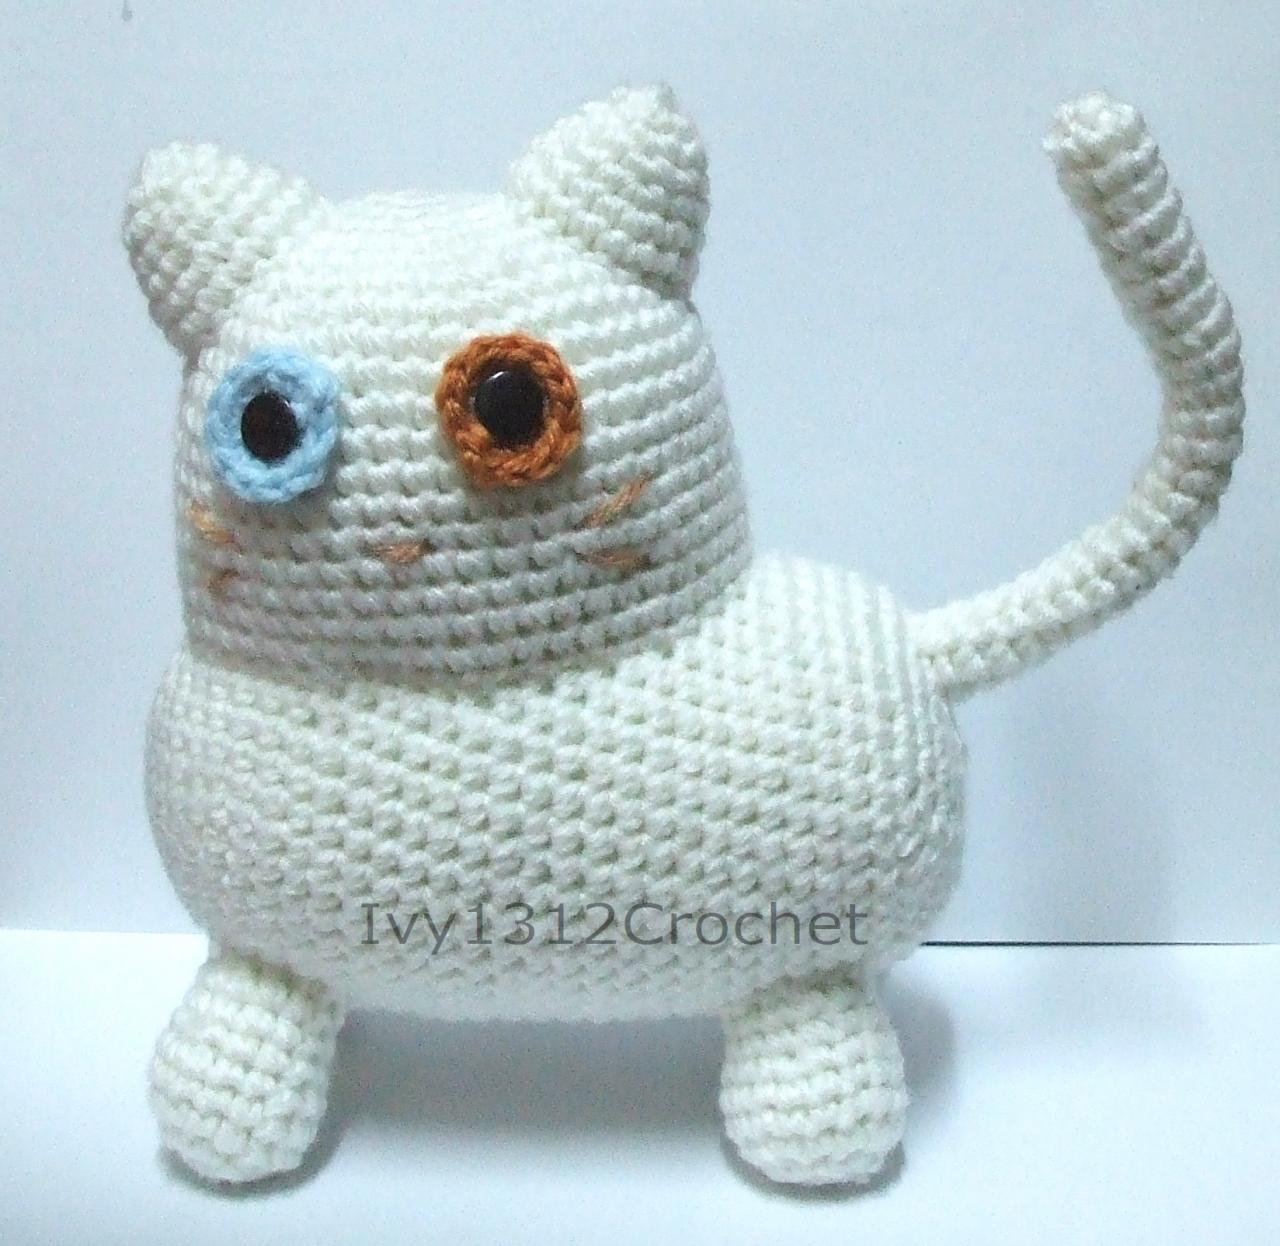 Cottonball Kitty 8.46" - Finished Handmade Amigurumi Crochet Doll Home Decor Birthday Gift Baby Shower Toy